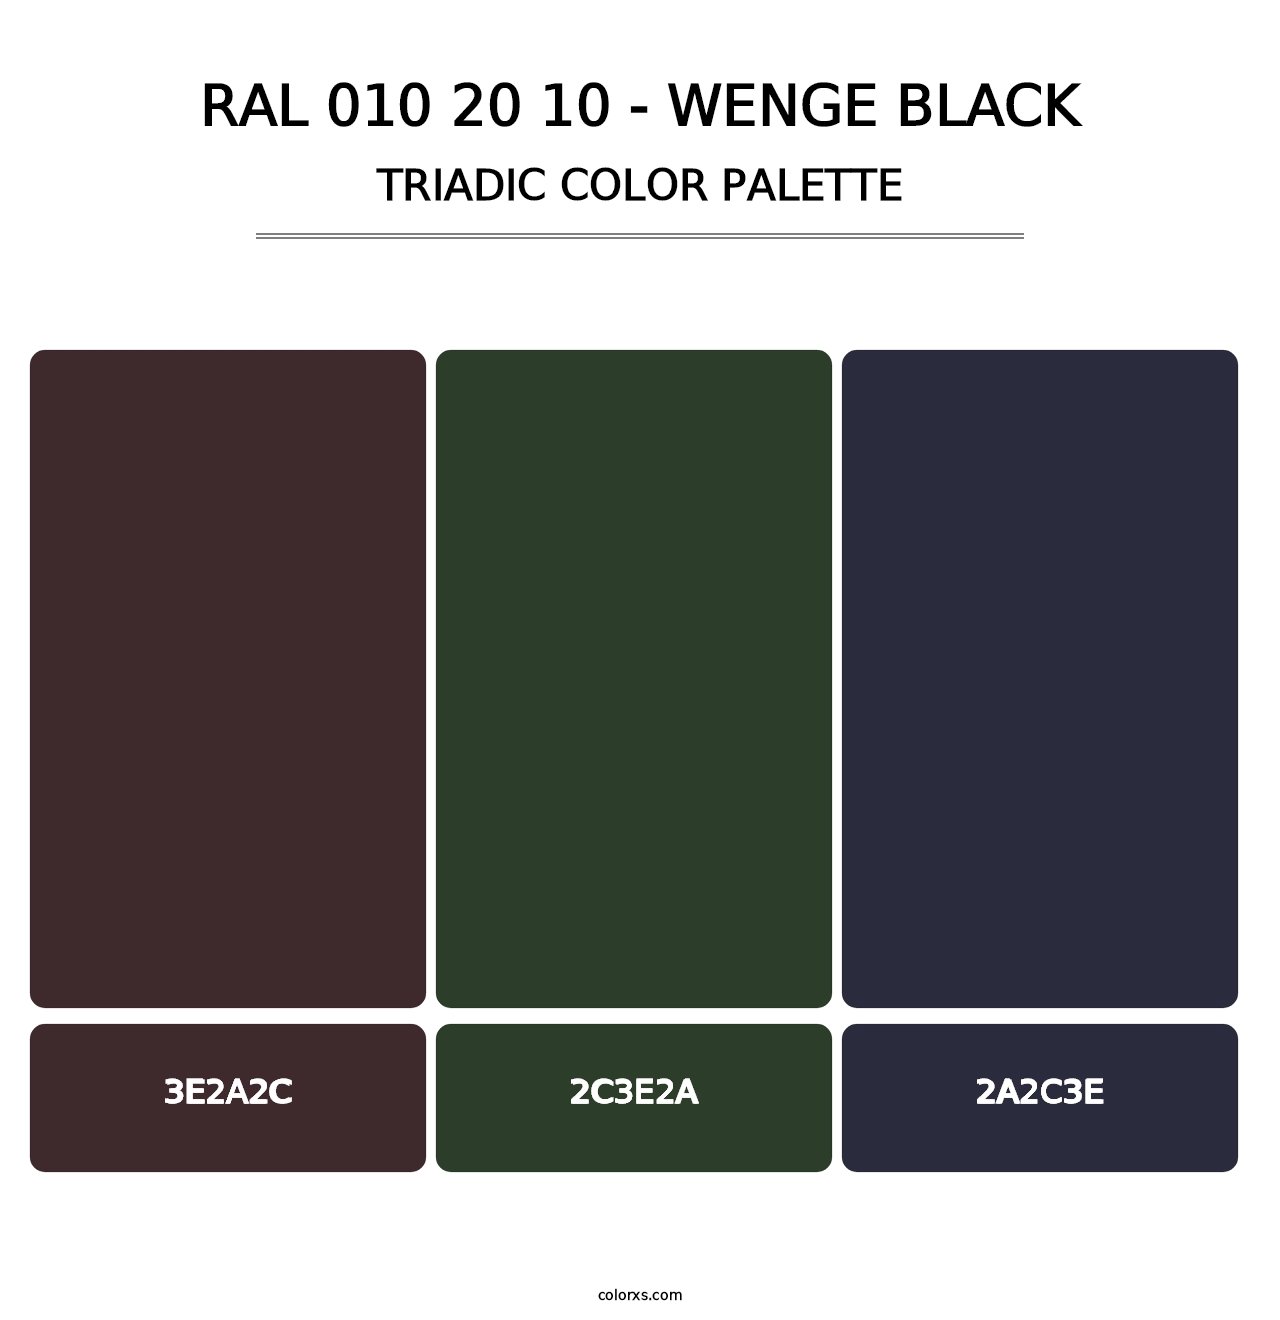 RAL 010 20 10 - Wenge Black - Triadic Color Palette